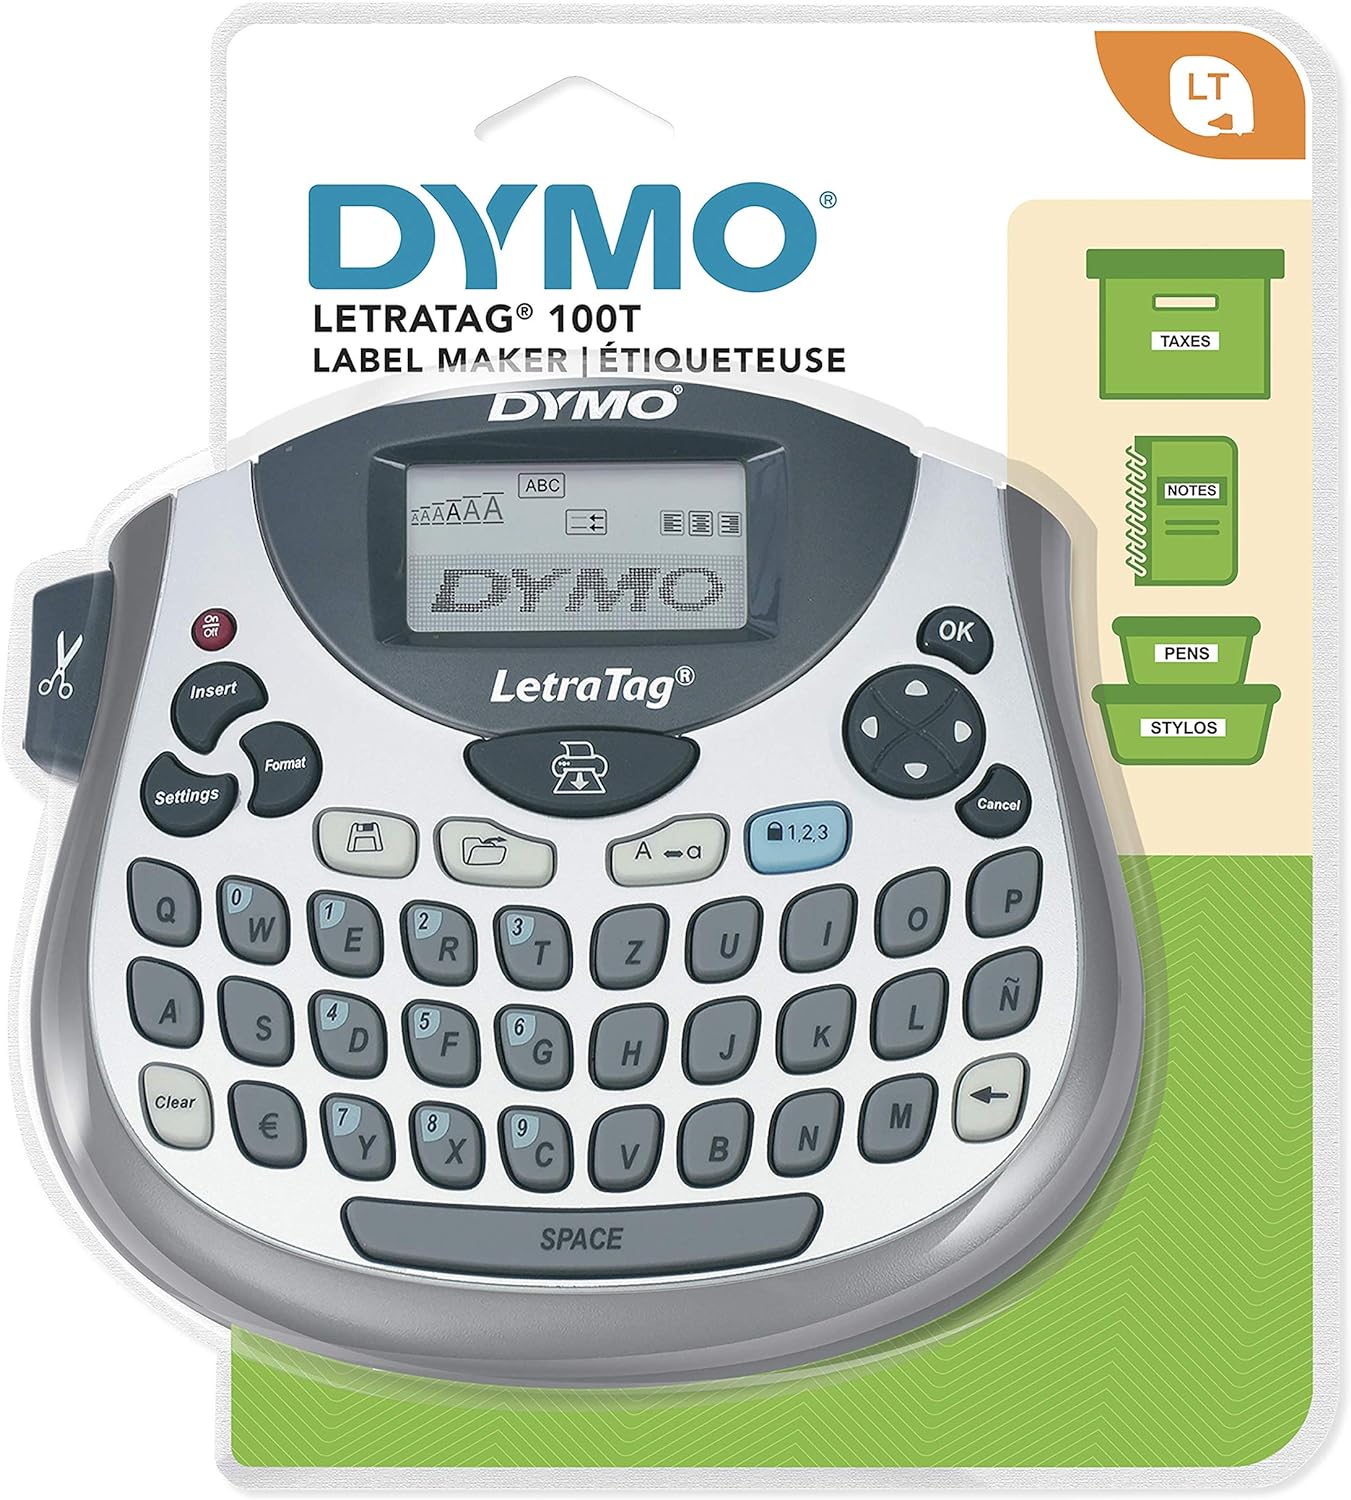 DYMO LetraTag LT-100T + Tape - Impresora de Etiquetas (Térmica Directa, 180 x 180 dpi, Gris, LCD, QWERTZ, 9 Etiqueta(s))